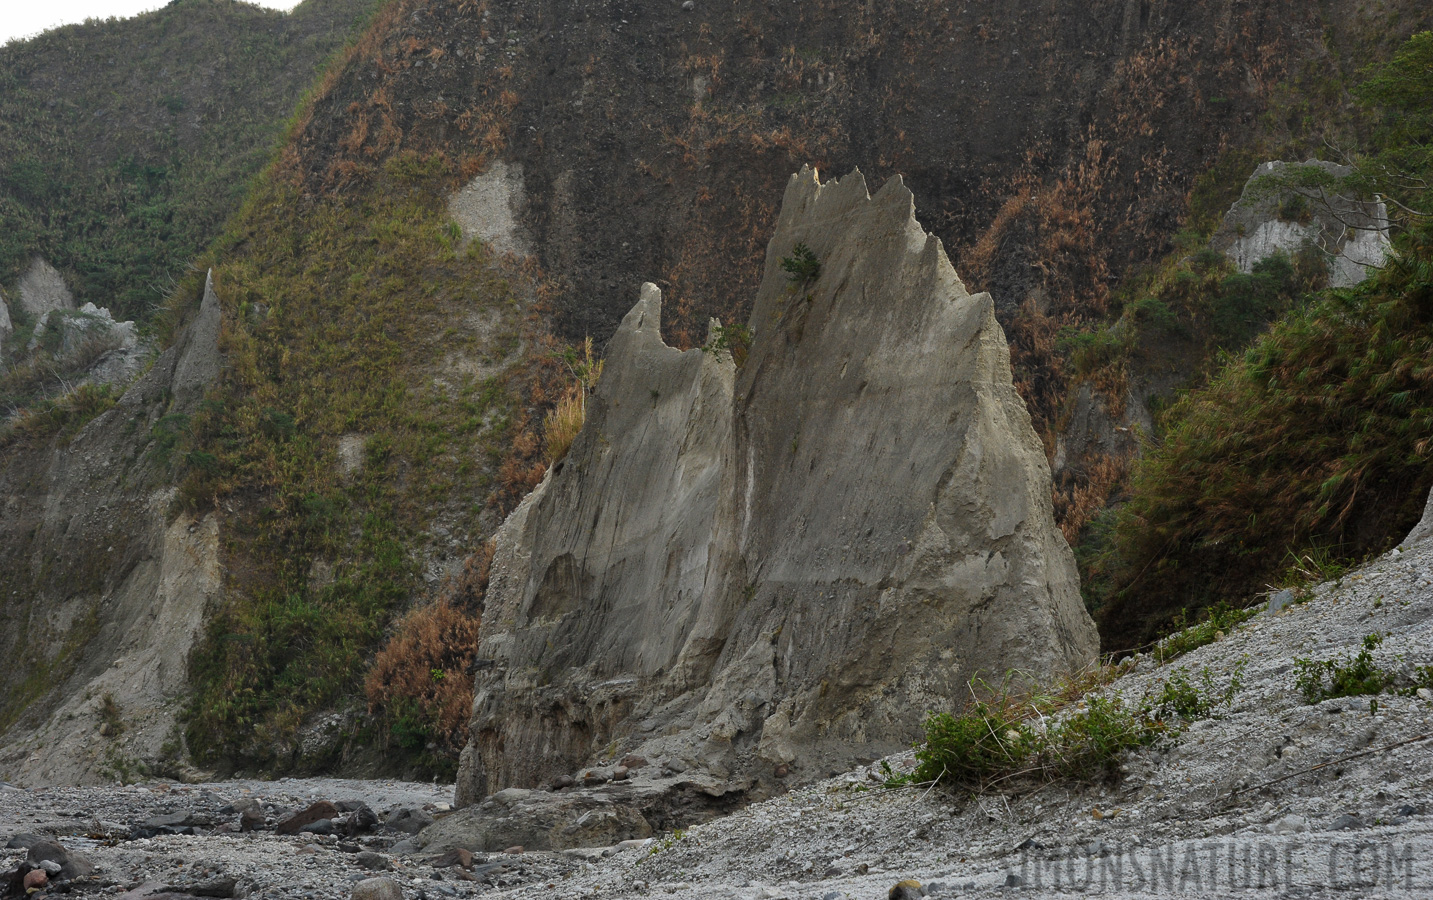 Mount Pinatubo [90 mm, 1/160 sec at f / 13, ISO 1600]